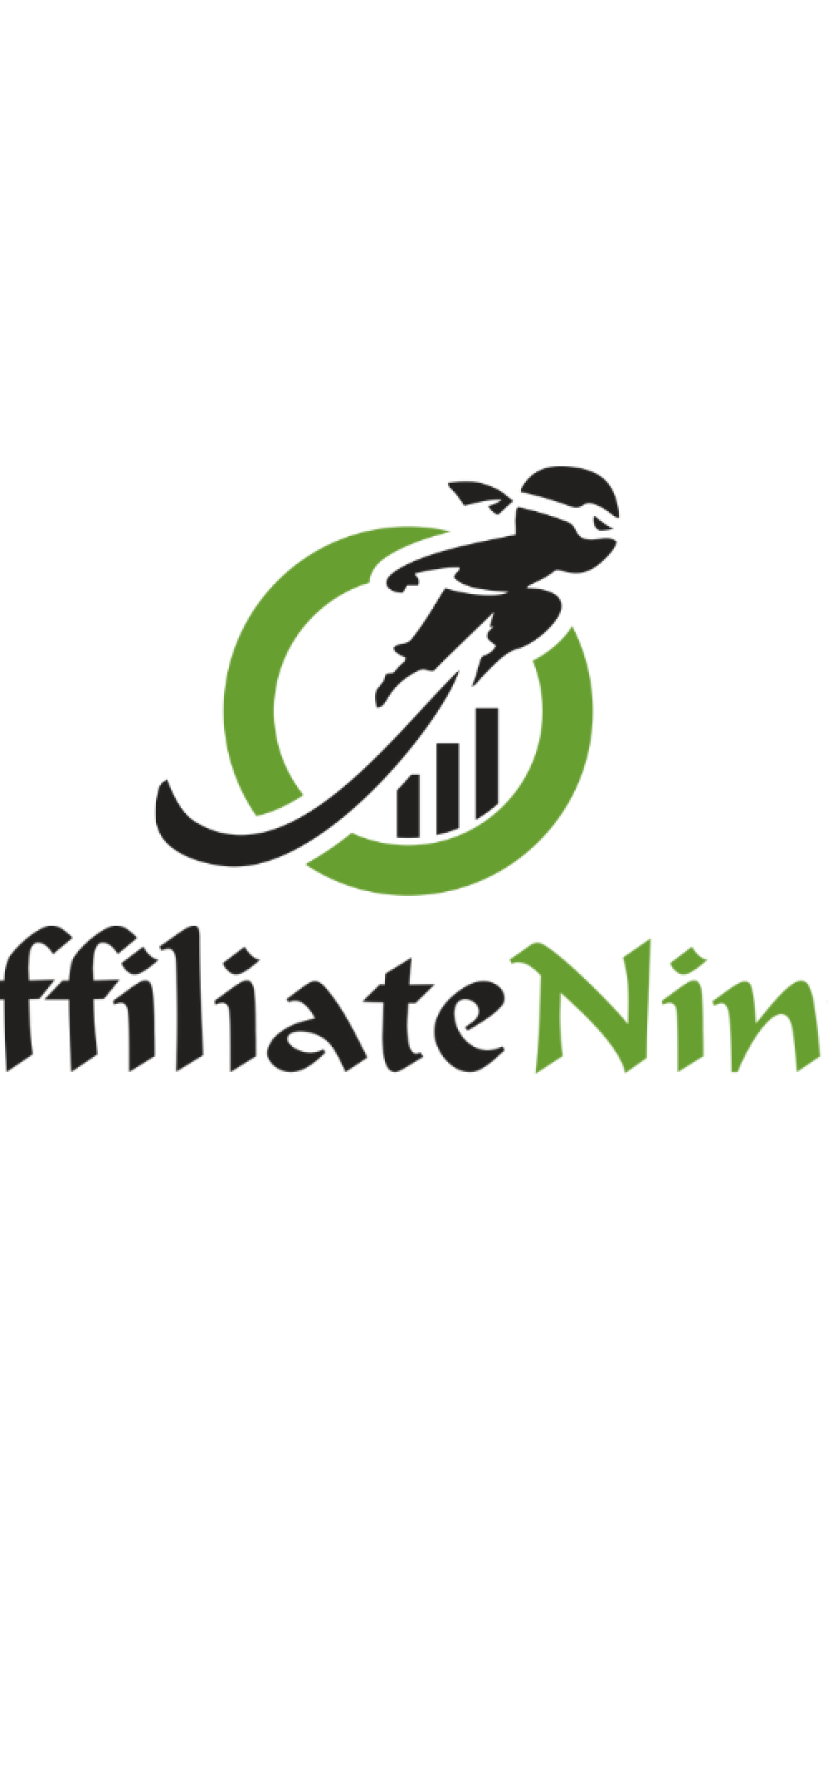 AffiliateNinja.com domain name for sale